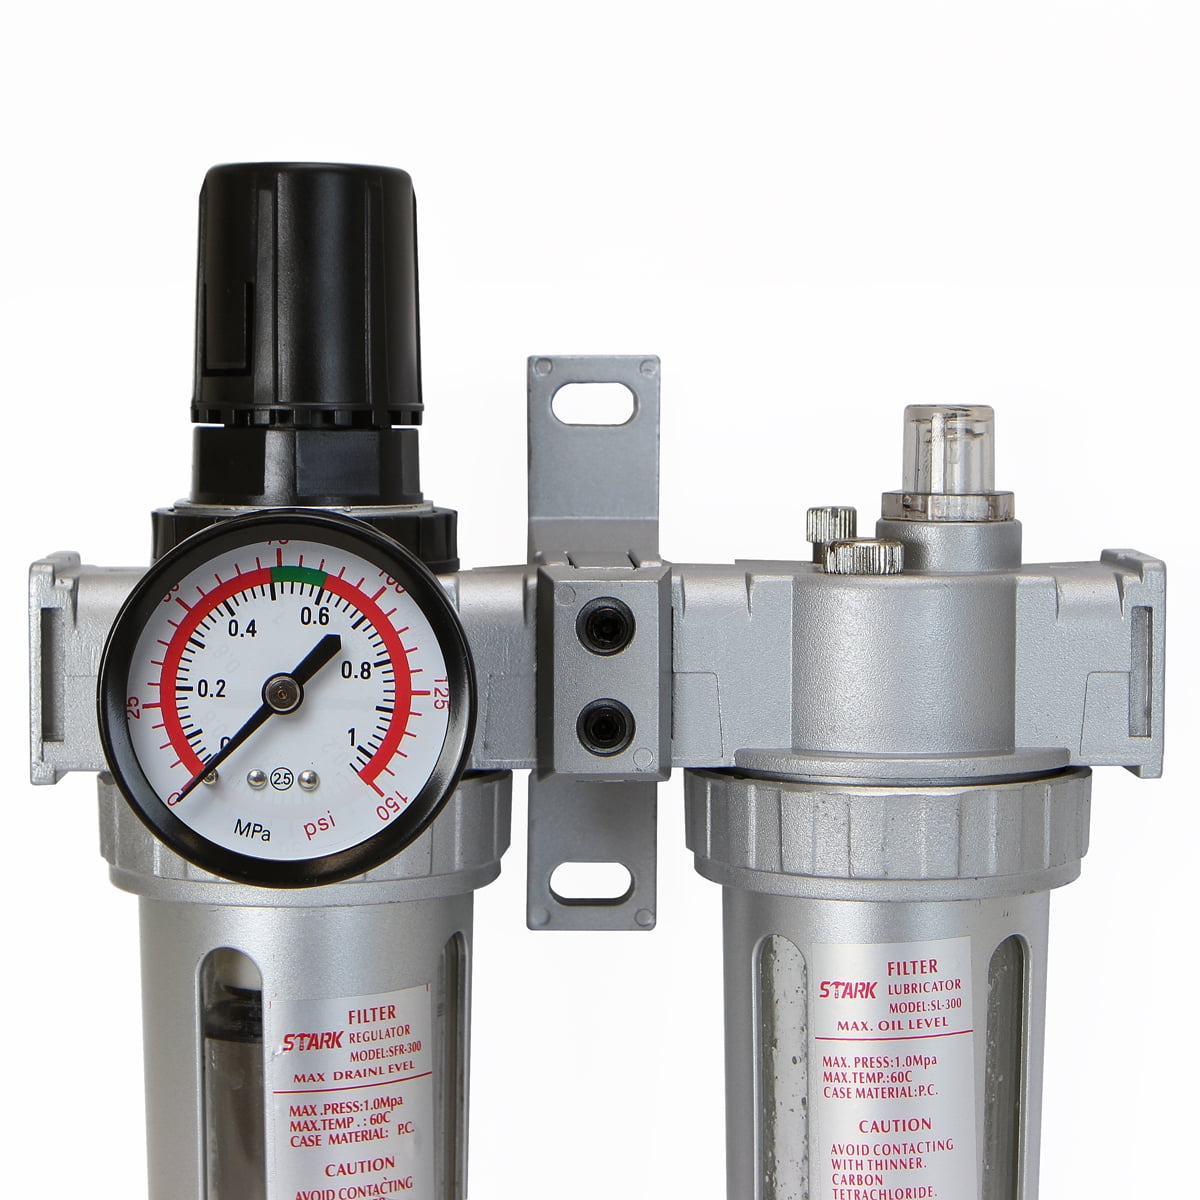 XtremepowerUS 3/8 Air Filter Regulator Lubricator Control Unit Water Separator Trap 150 PSI 